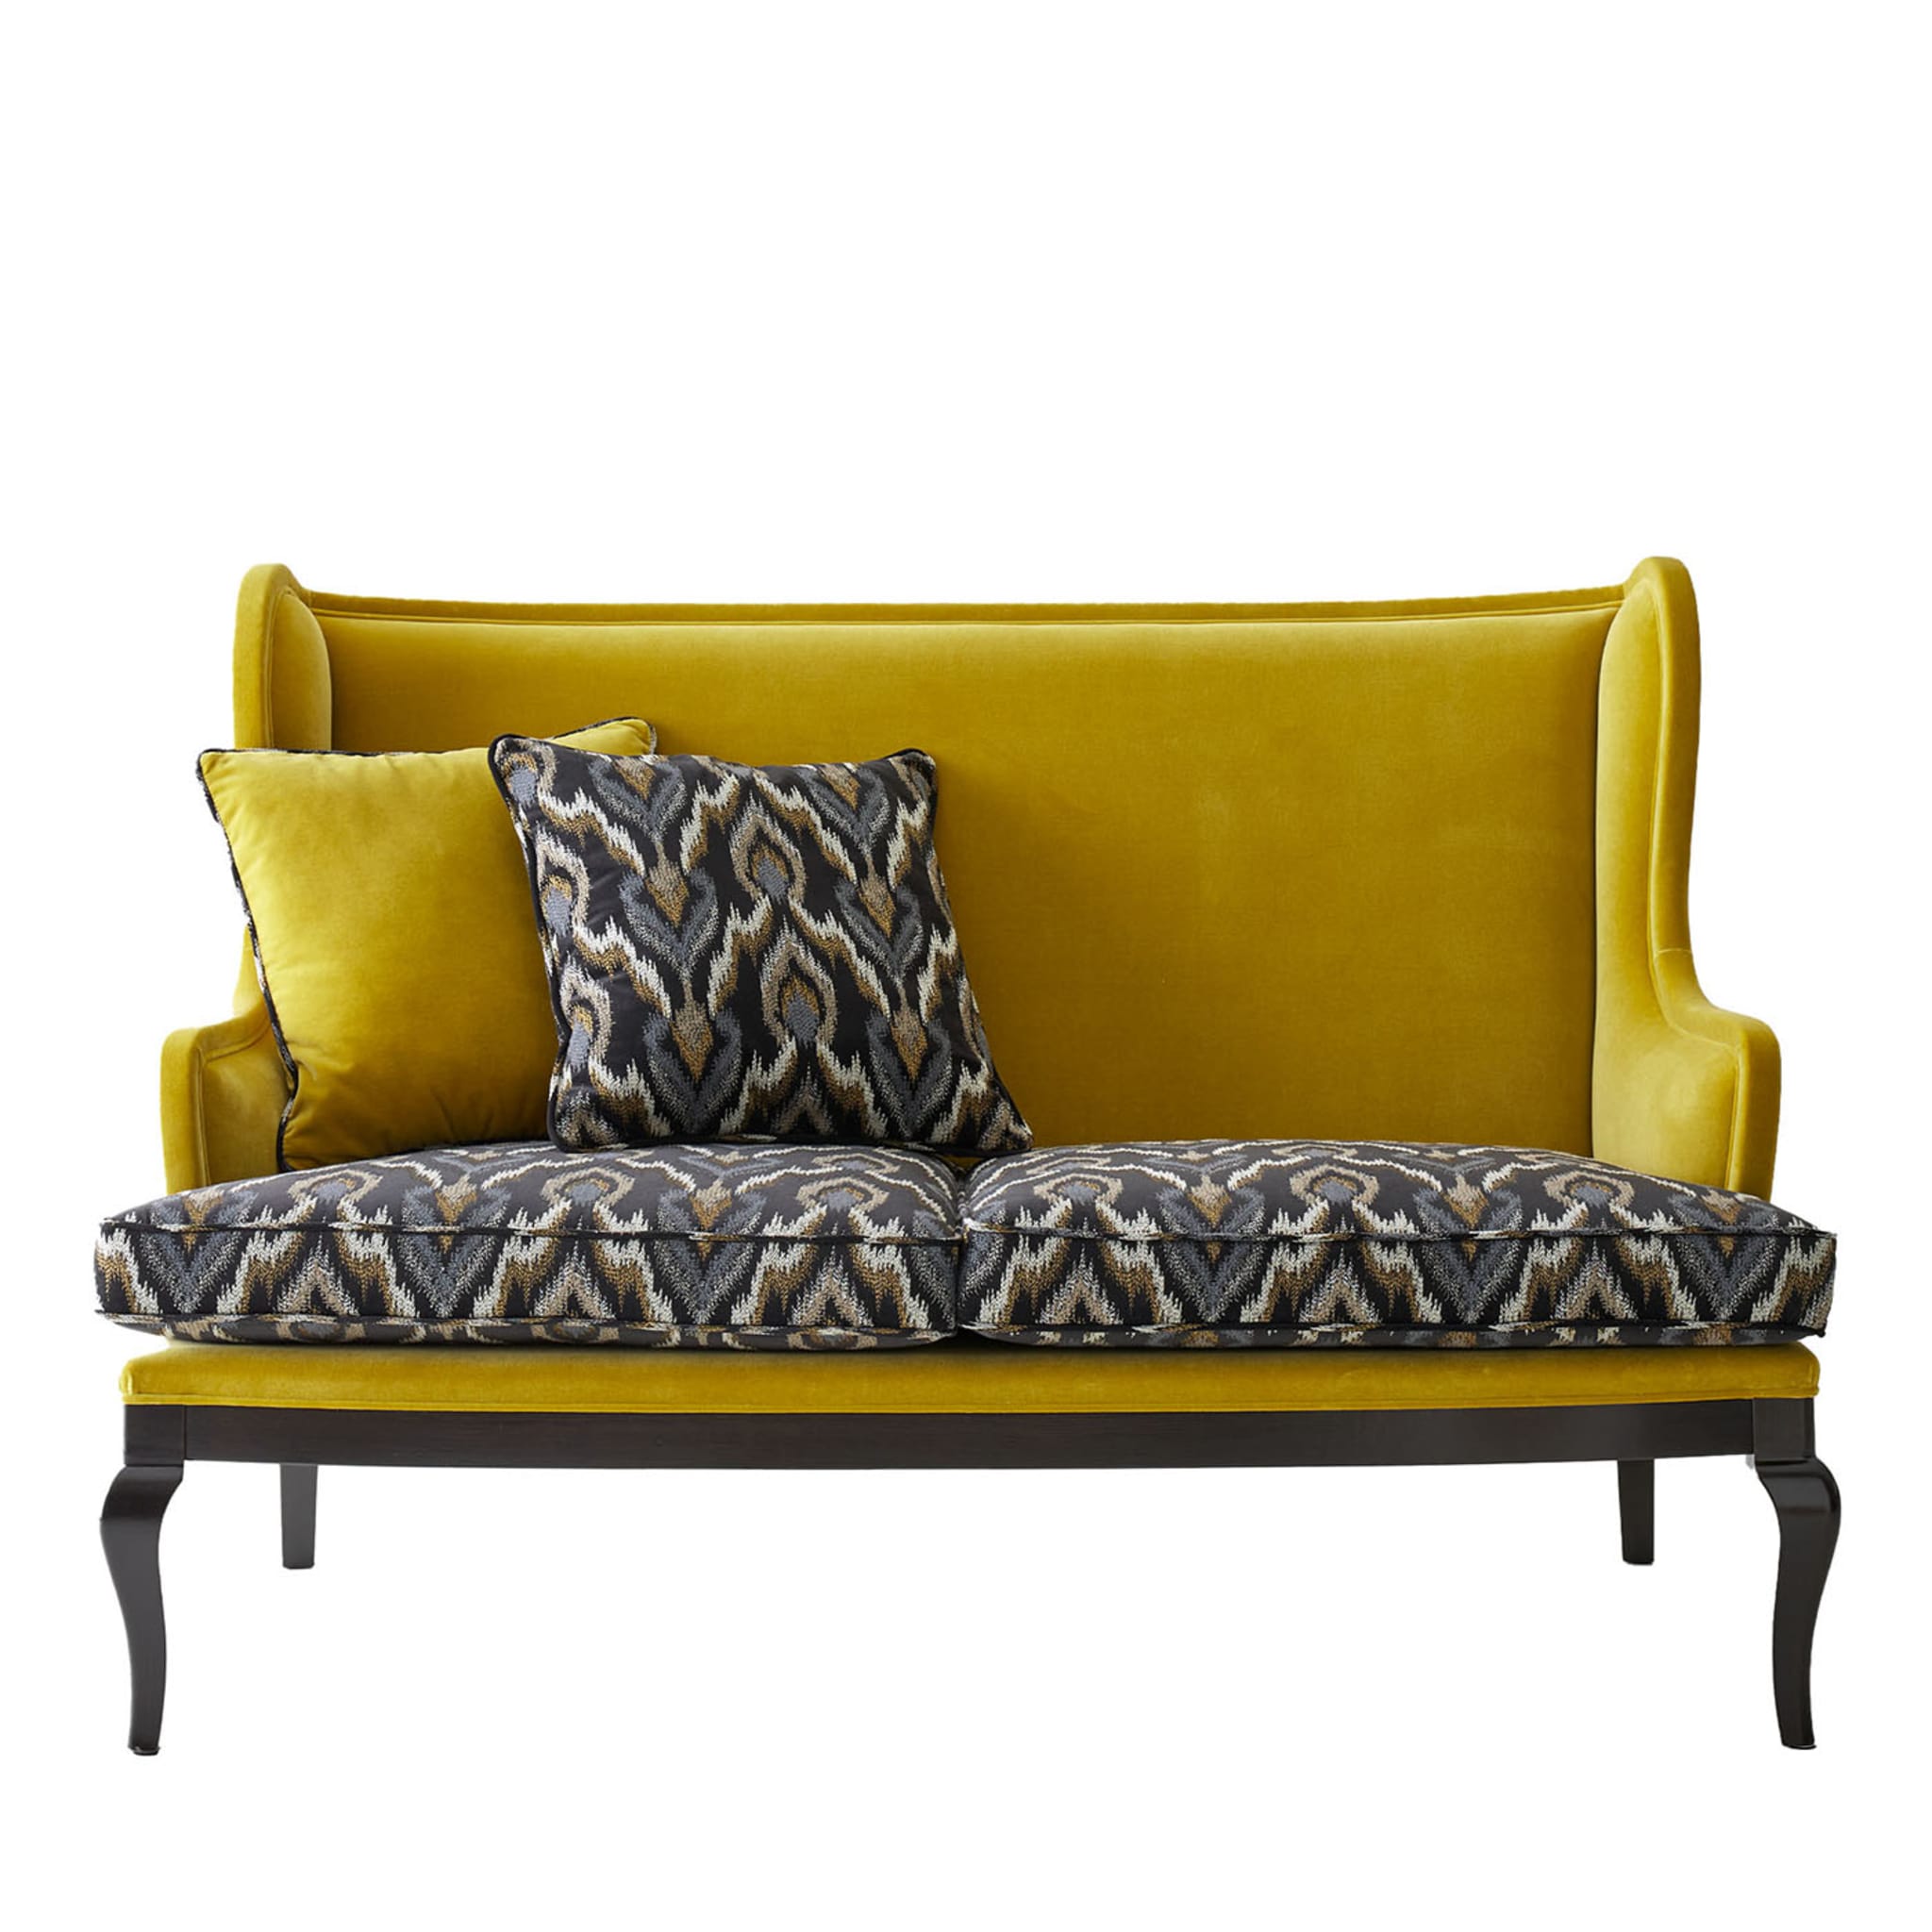 Lemonade 2-Seater Yellow Sofa - Main view